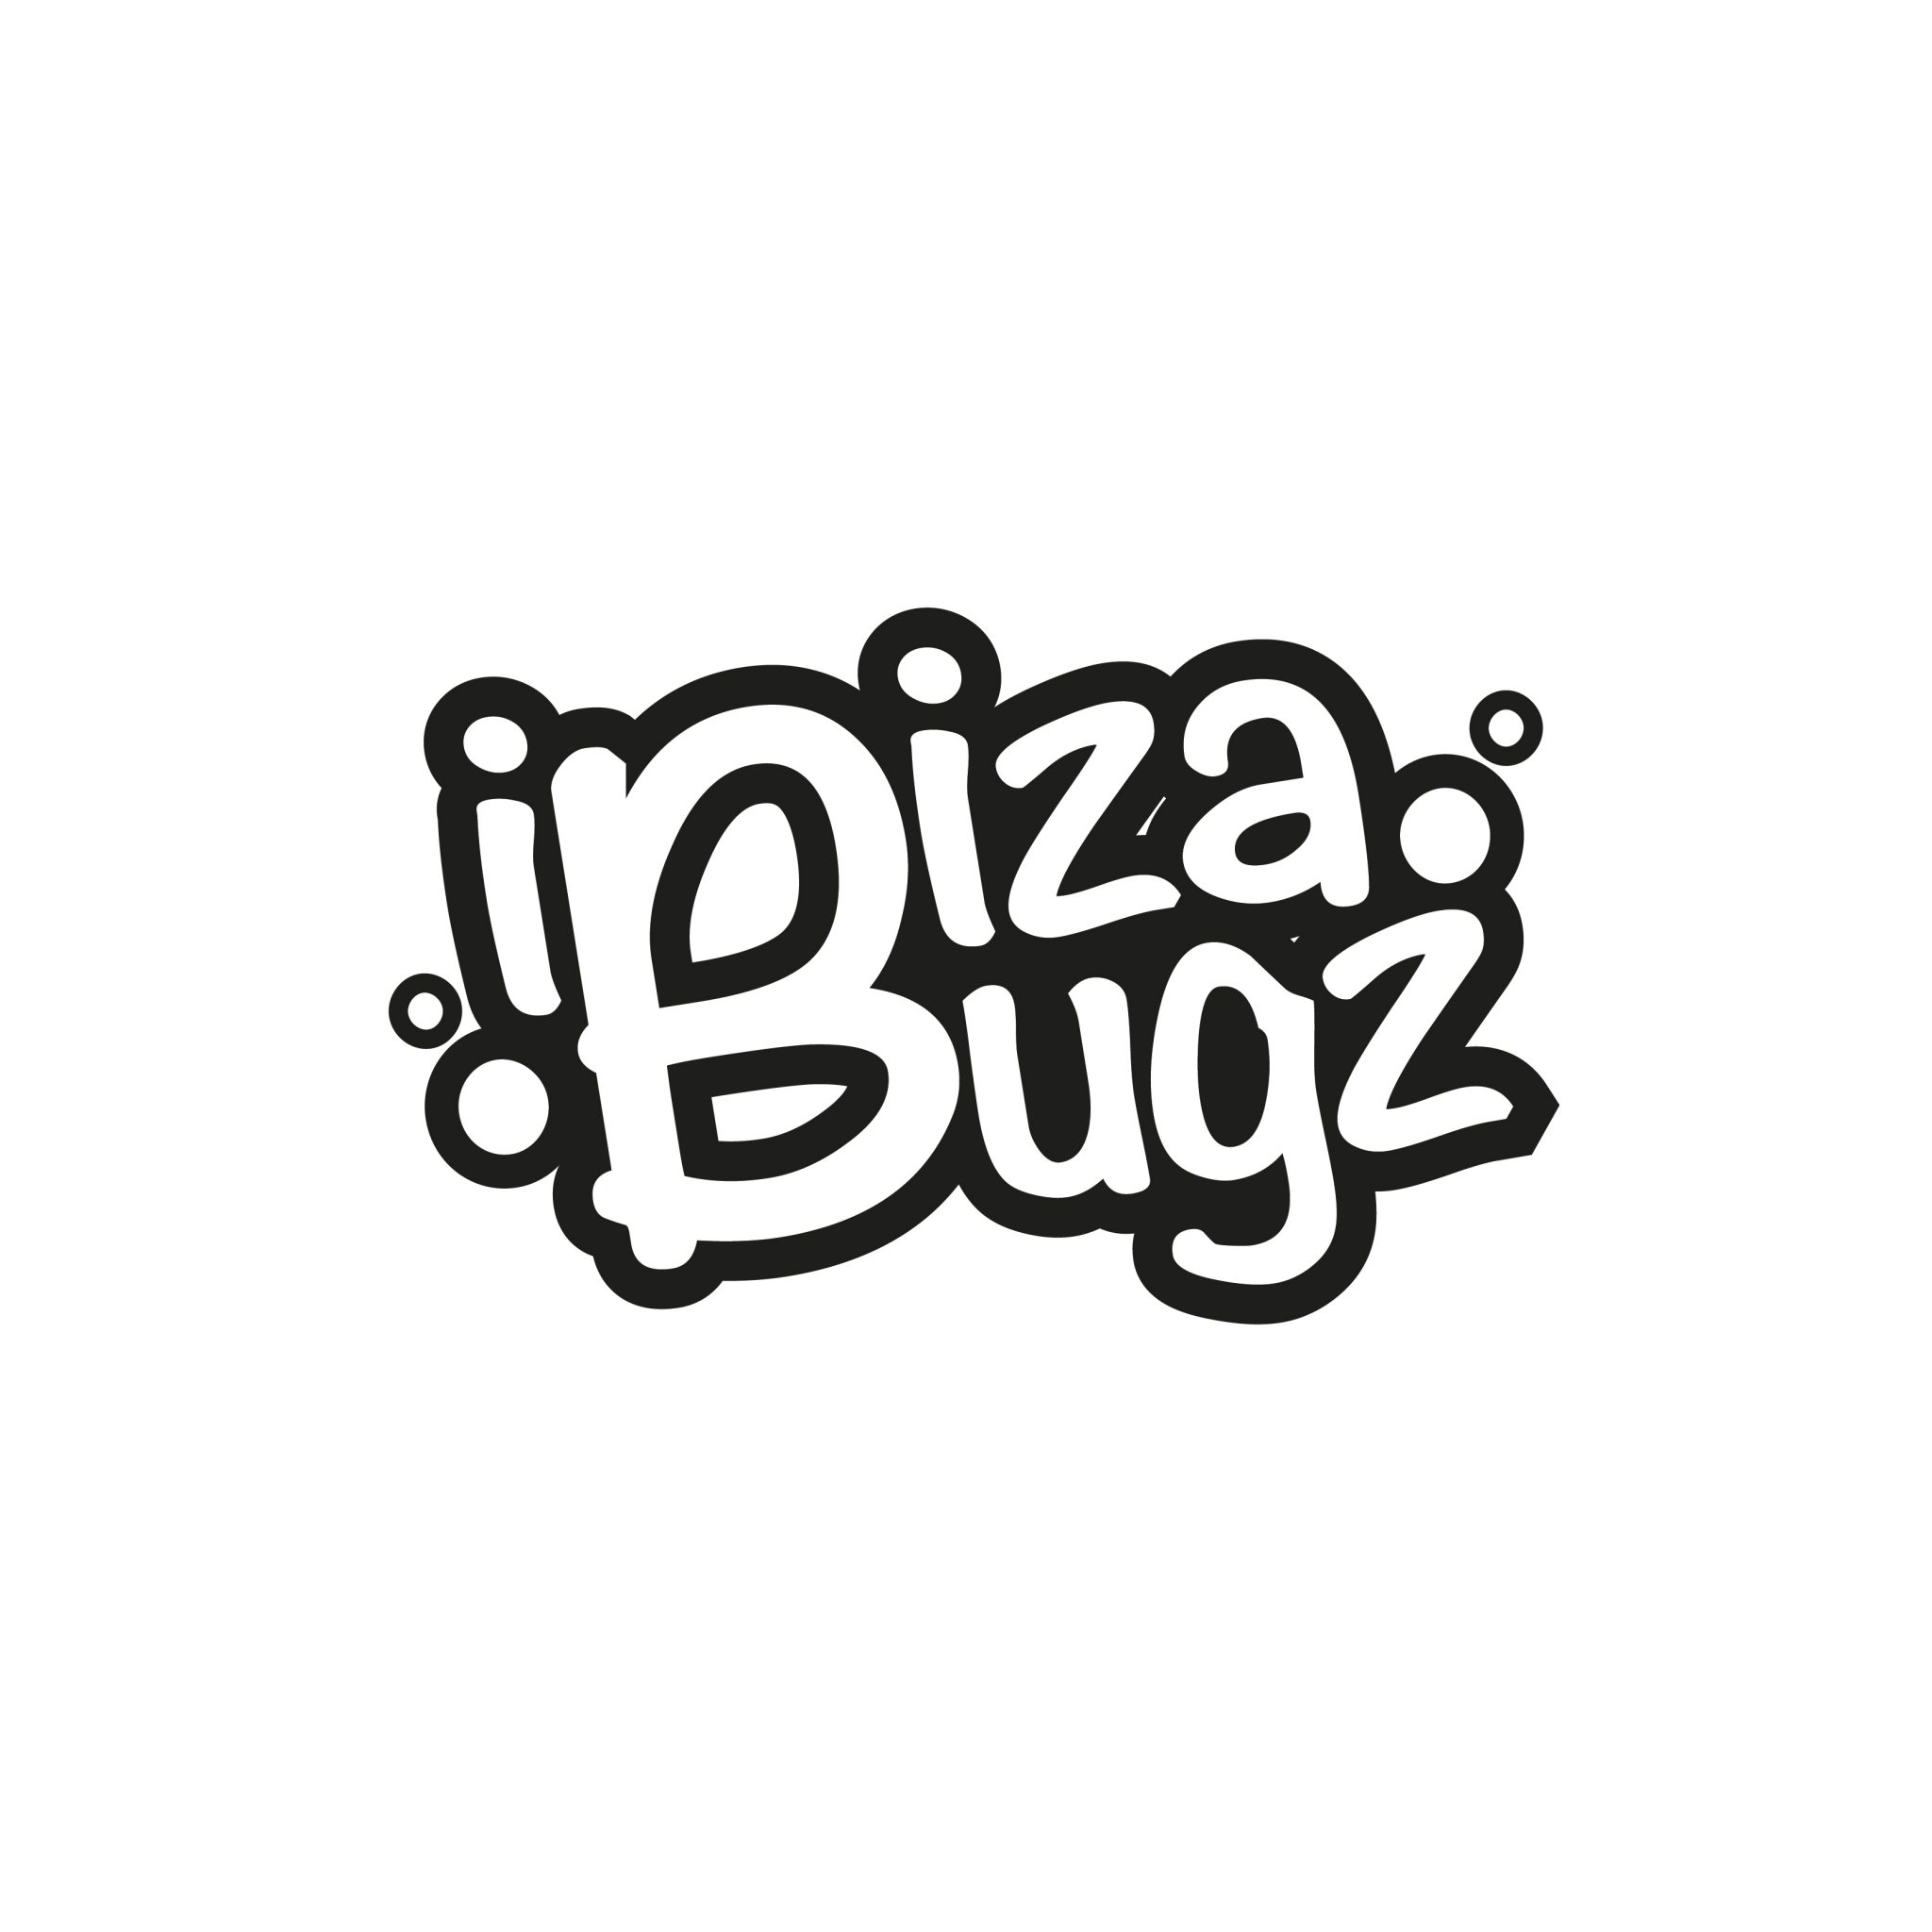 Ibiza Bugs